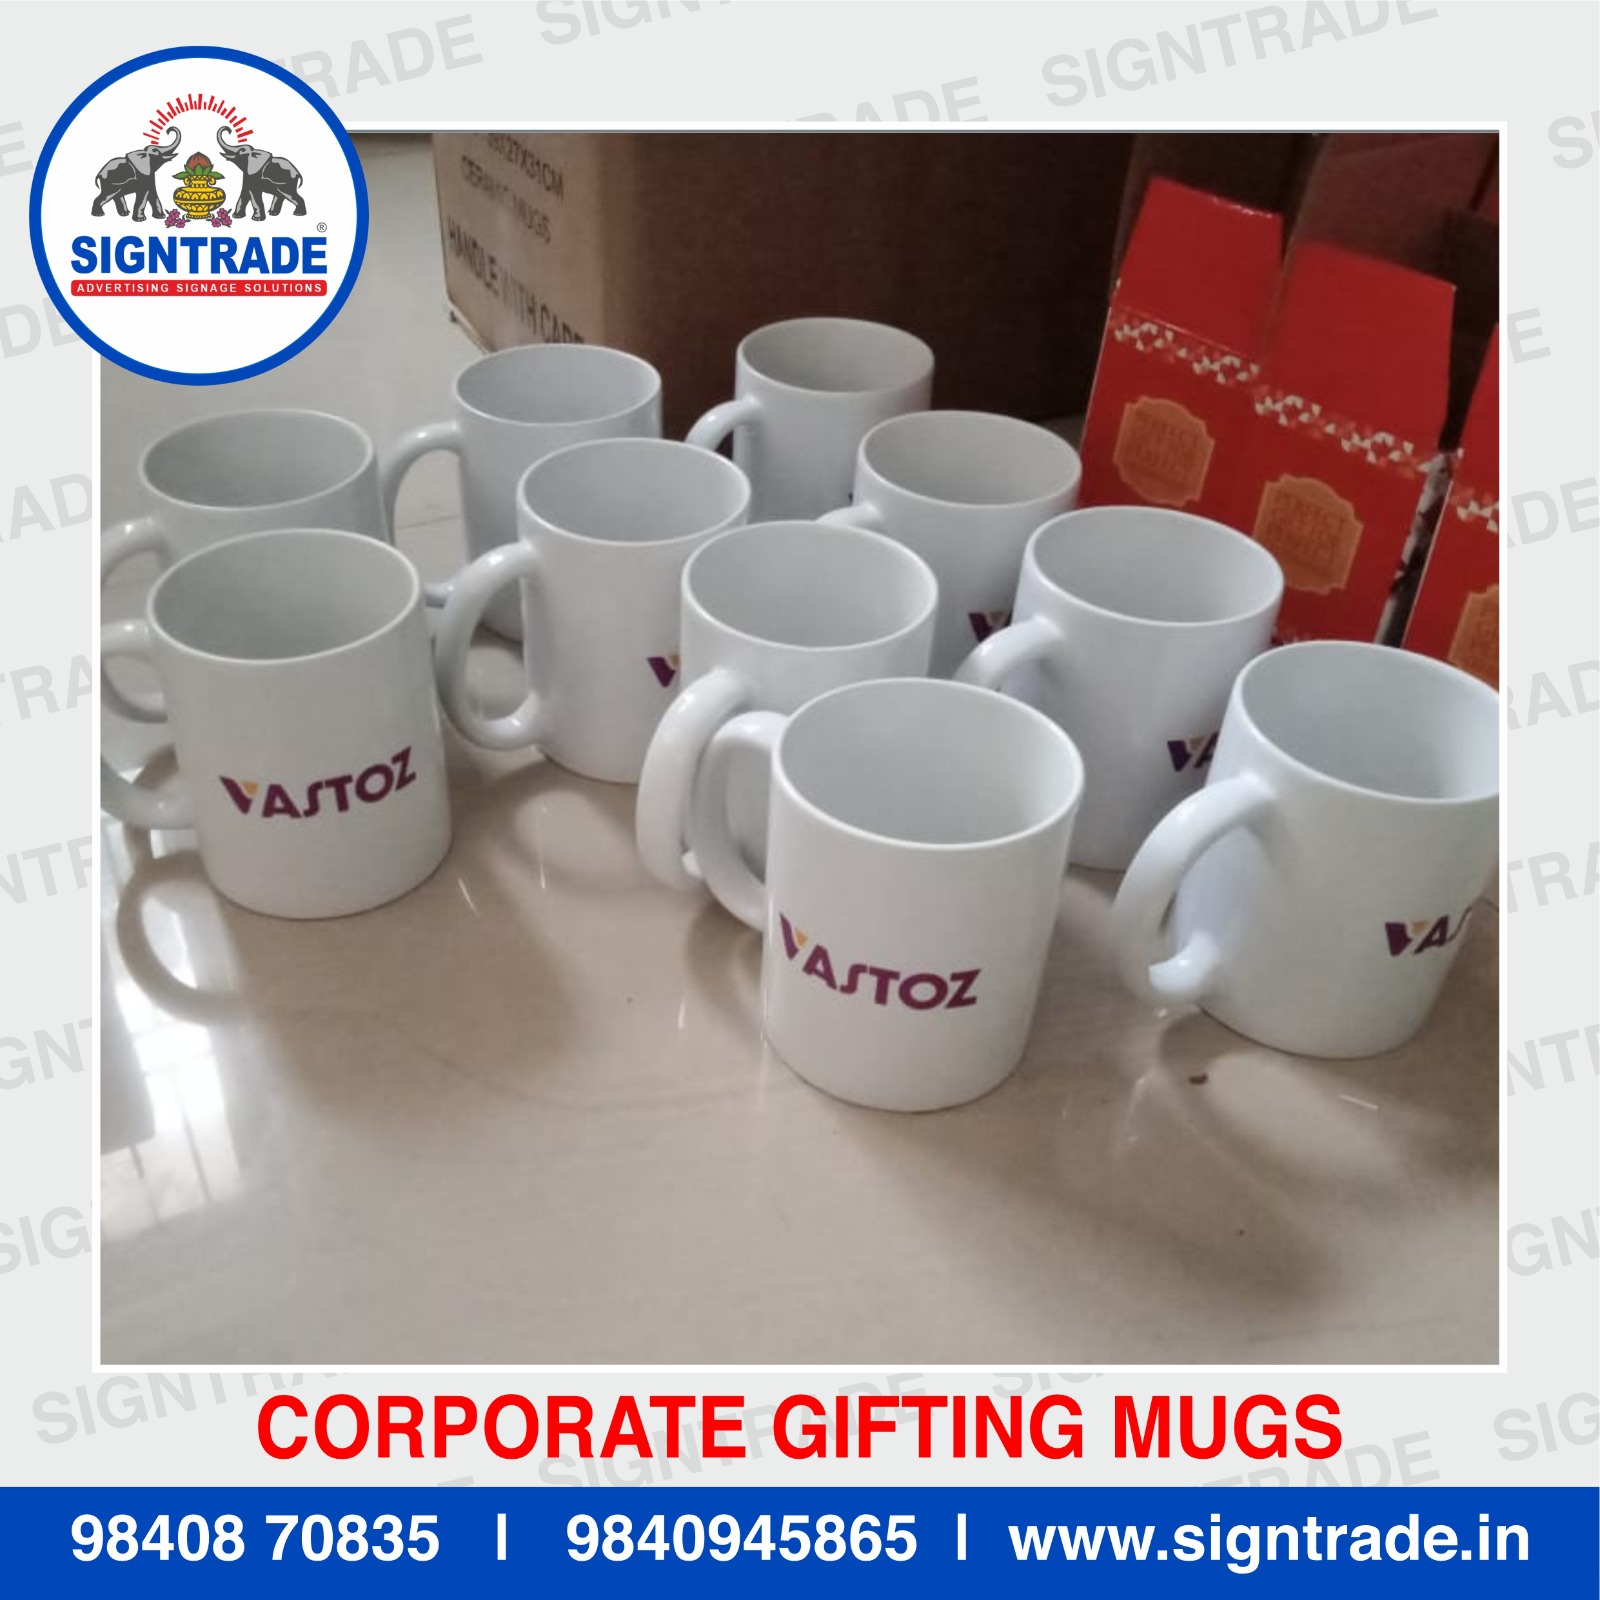 Corporate Mug Gifts in Chennai